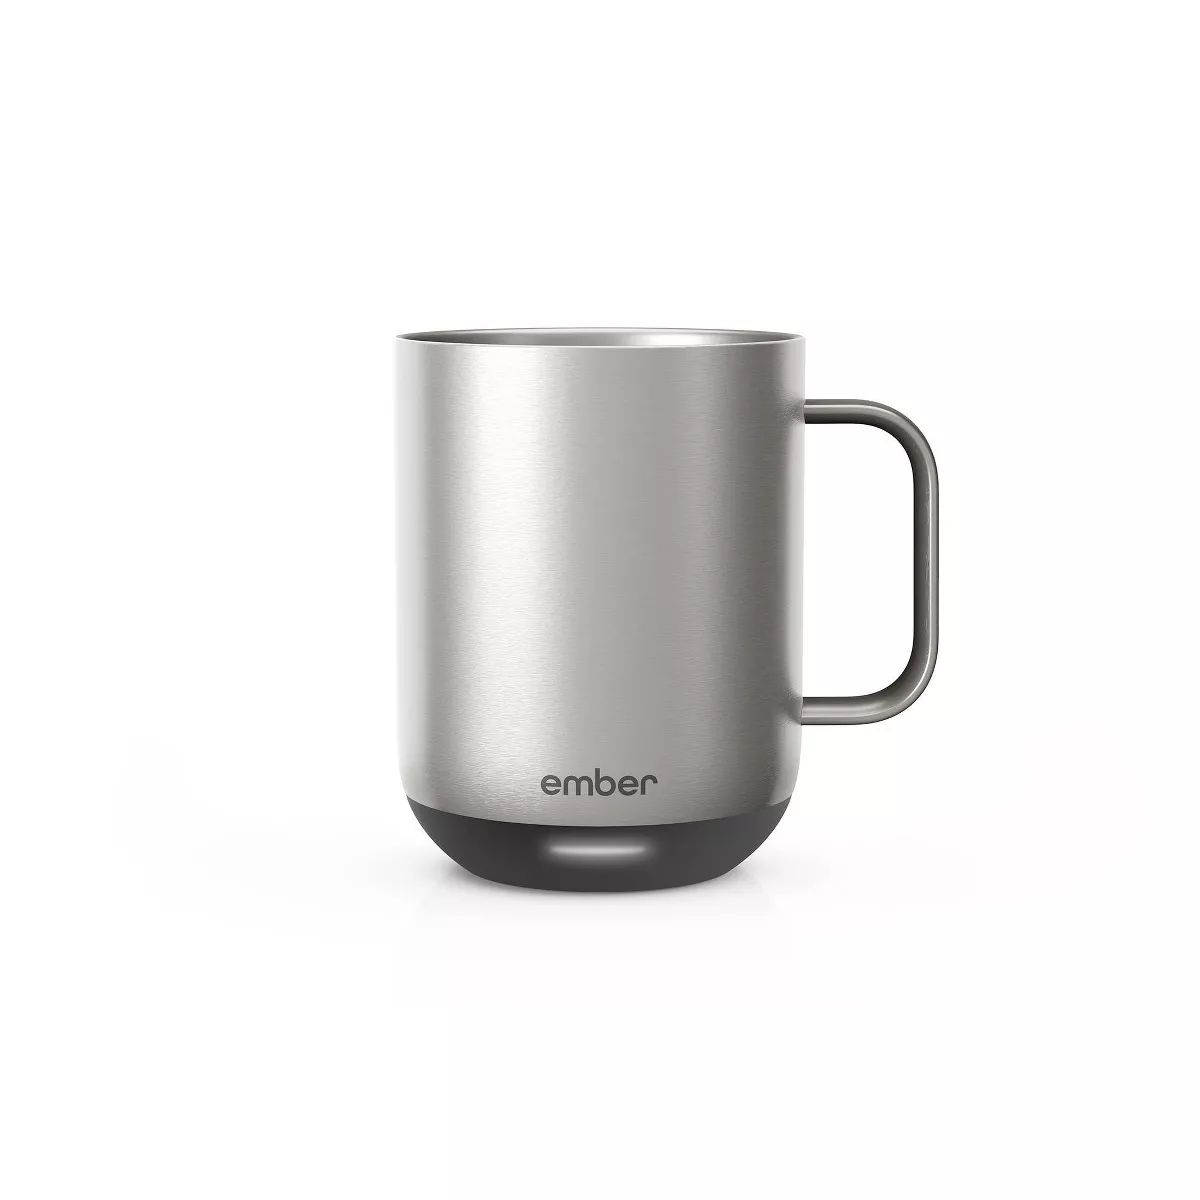 Ember Mug² Temperature Control Smart Mug 10oz - Stainless Steel | Target